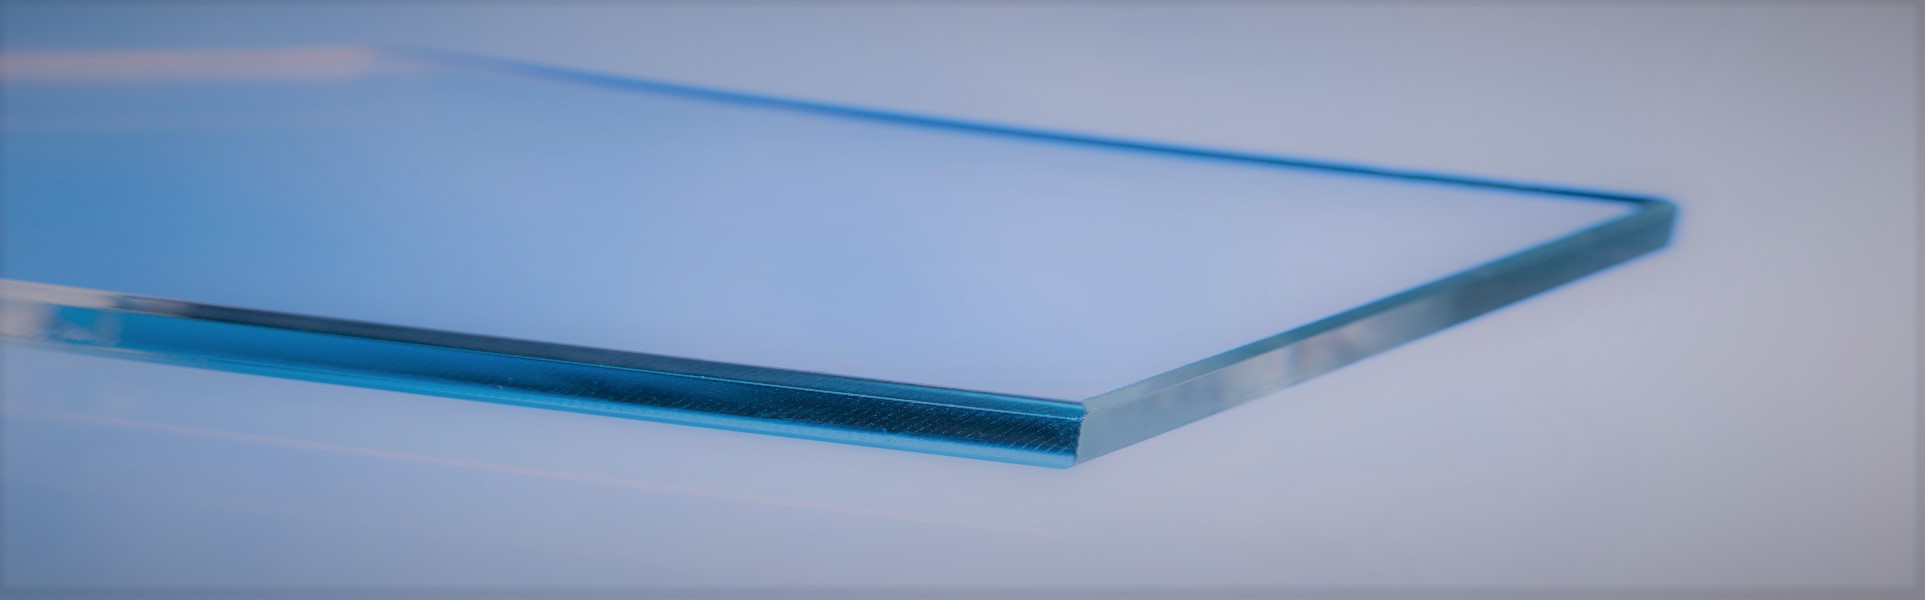 Slider, Toughened Safety Glass Installation in Soho, W1